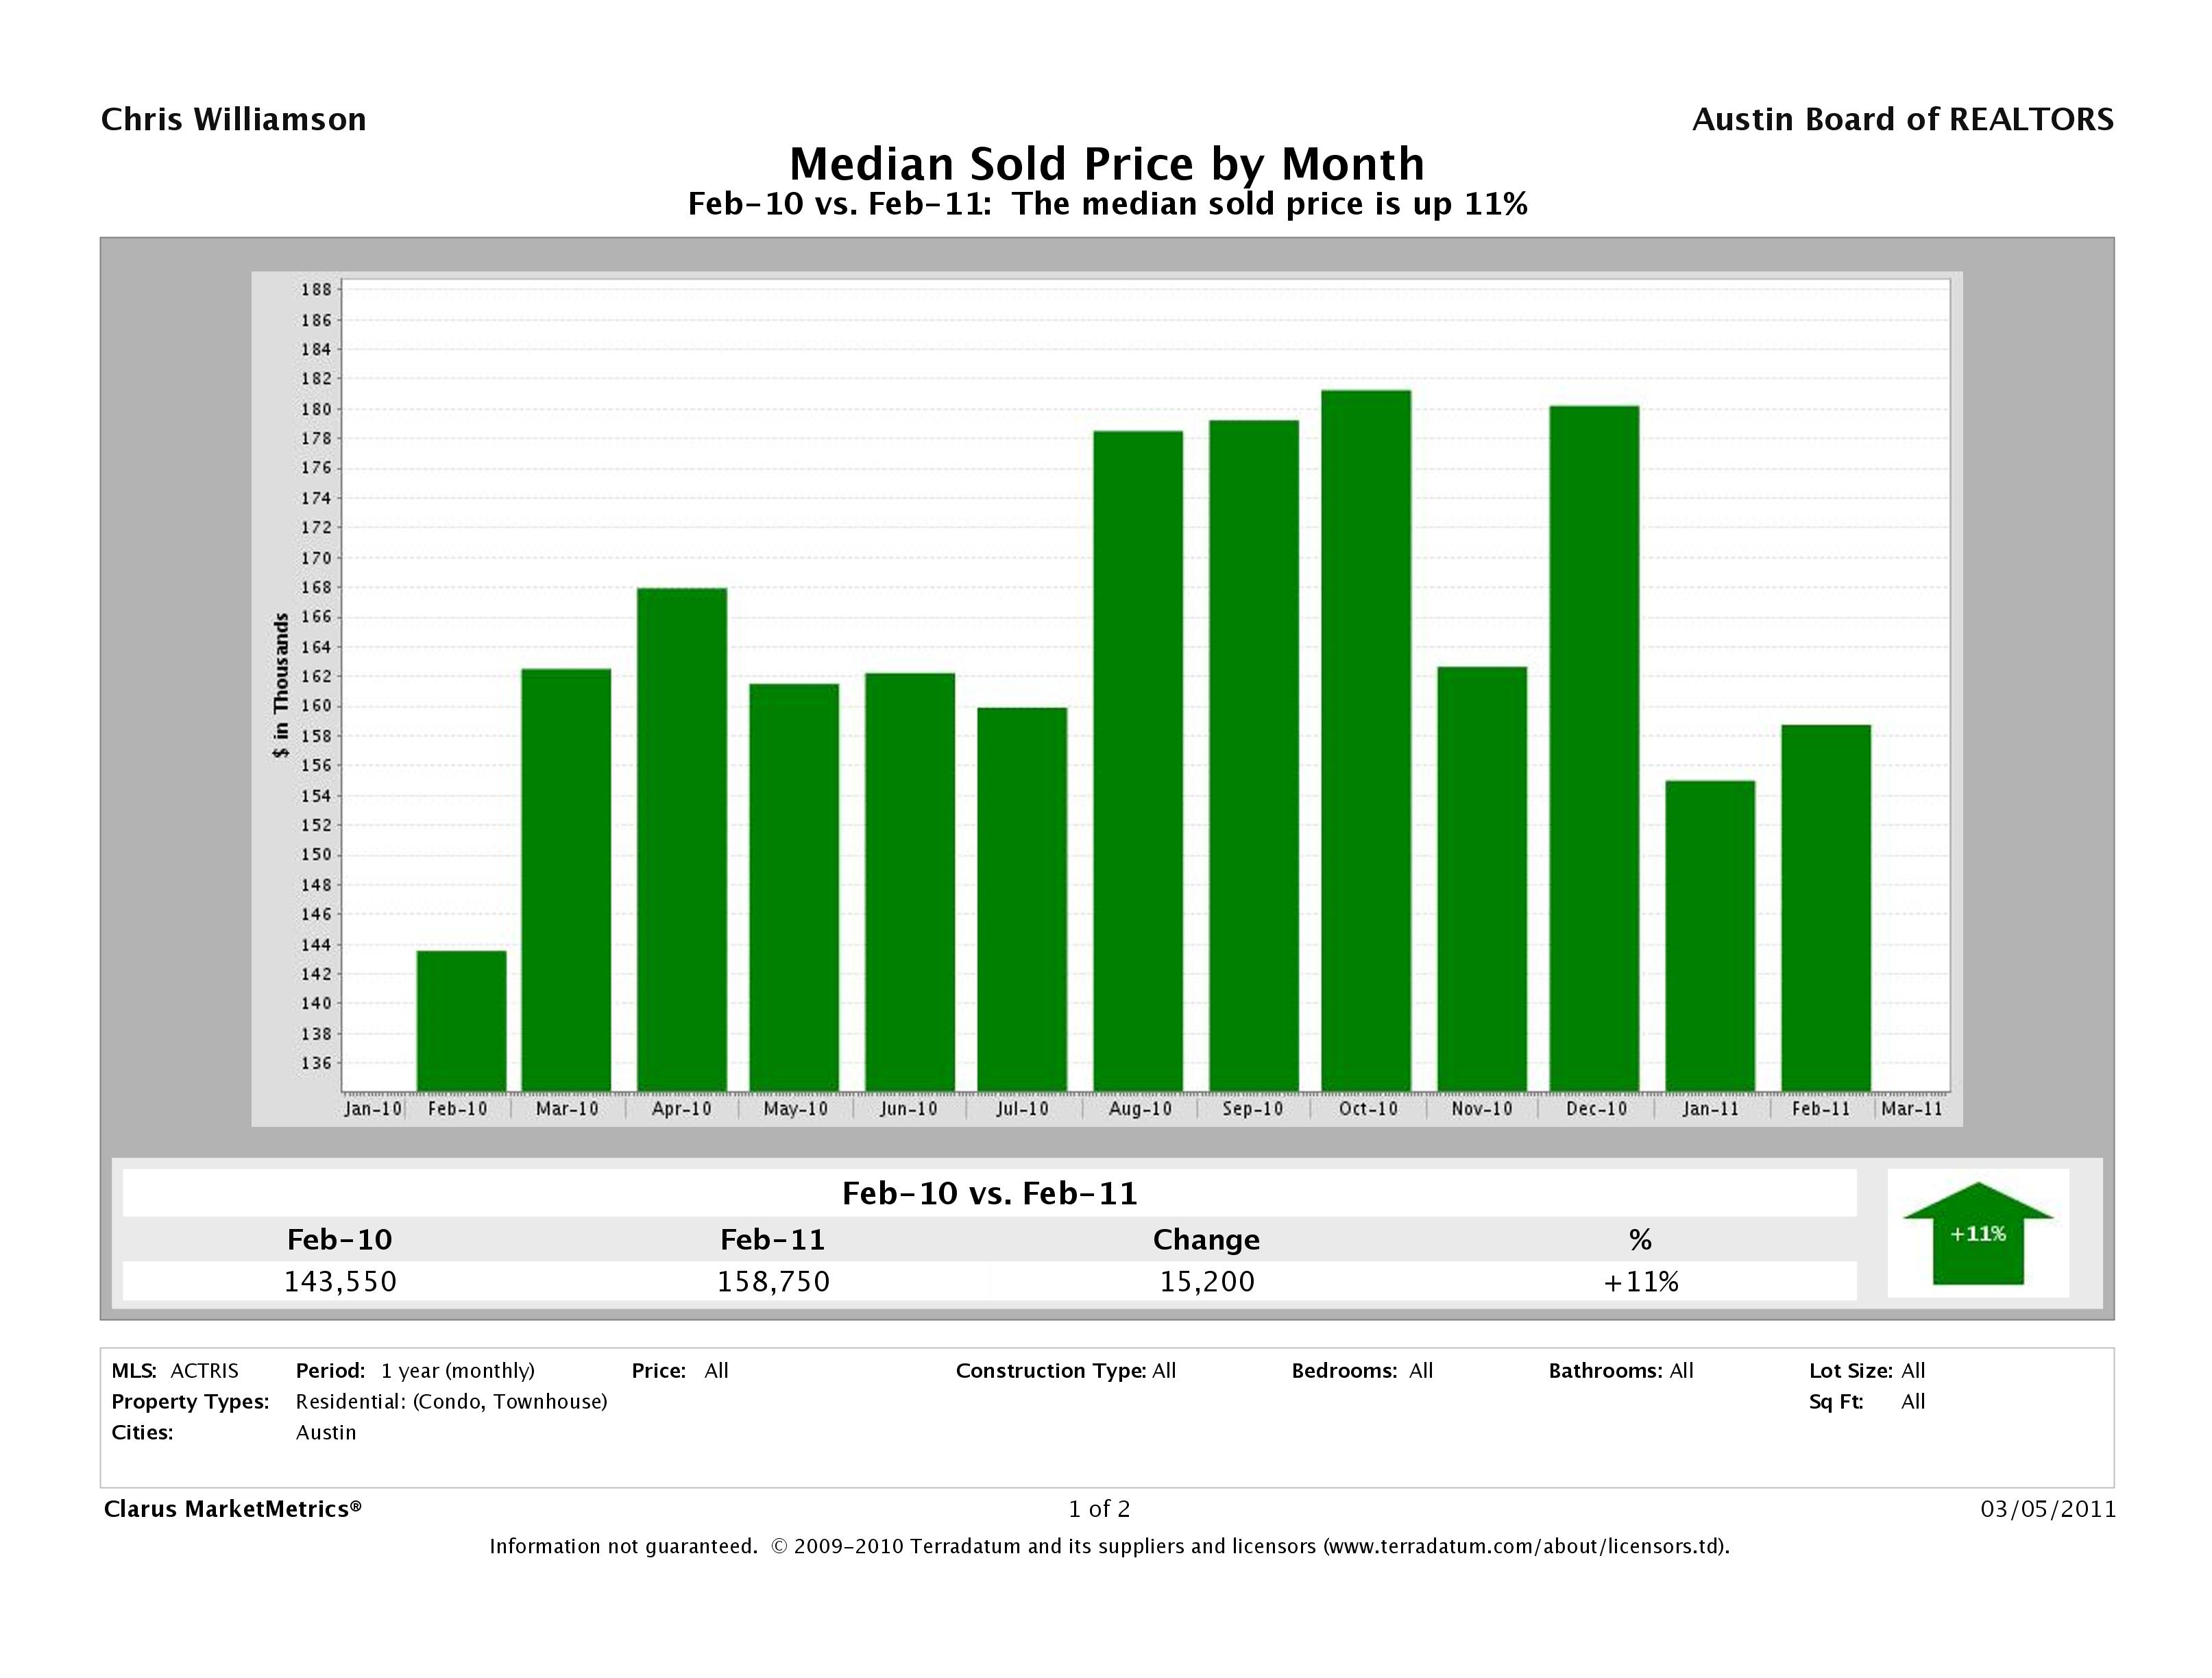 Austin median condo price february 2011